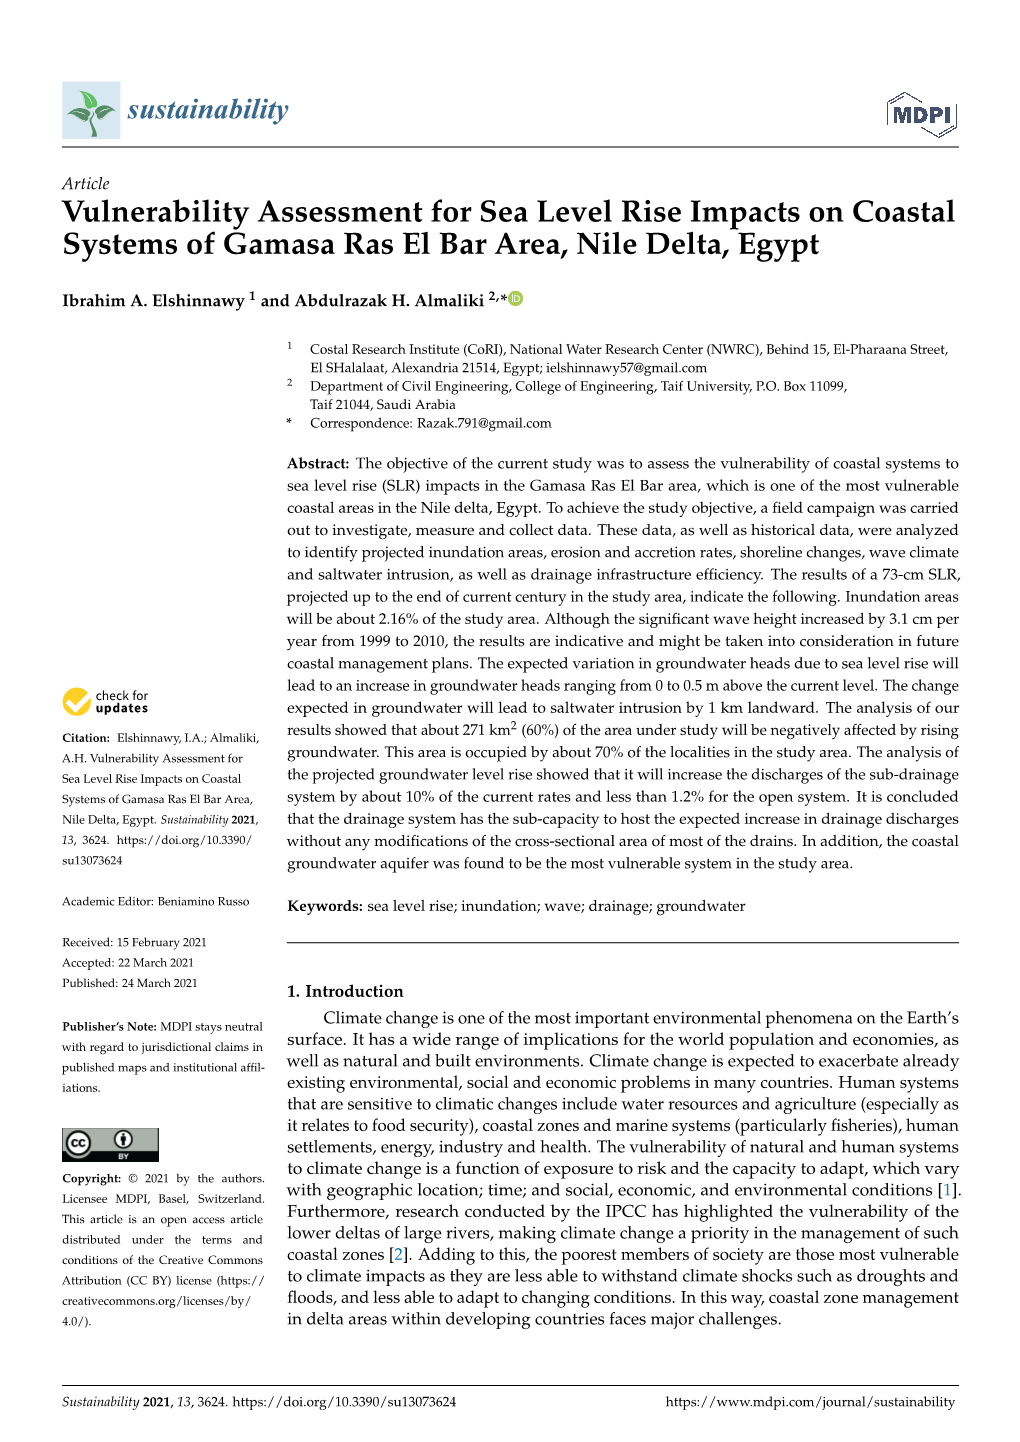 Vulnerability Assessment for Sea Level Rise Impacts on Coastal Systems of Gamasa Ras El Bar Area, Nile Delta, Egypt